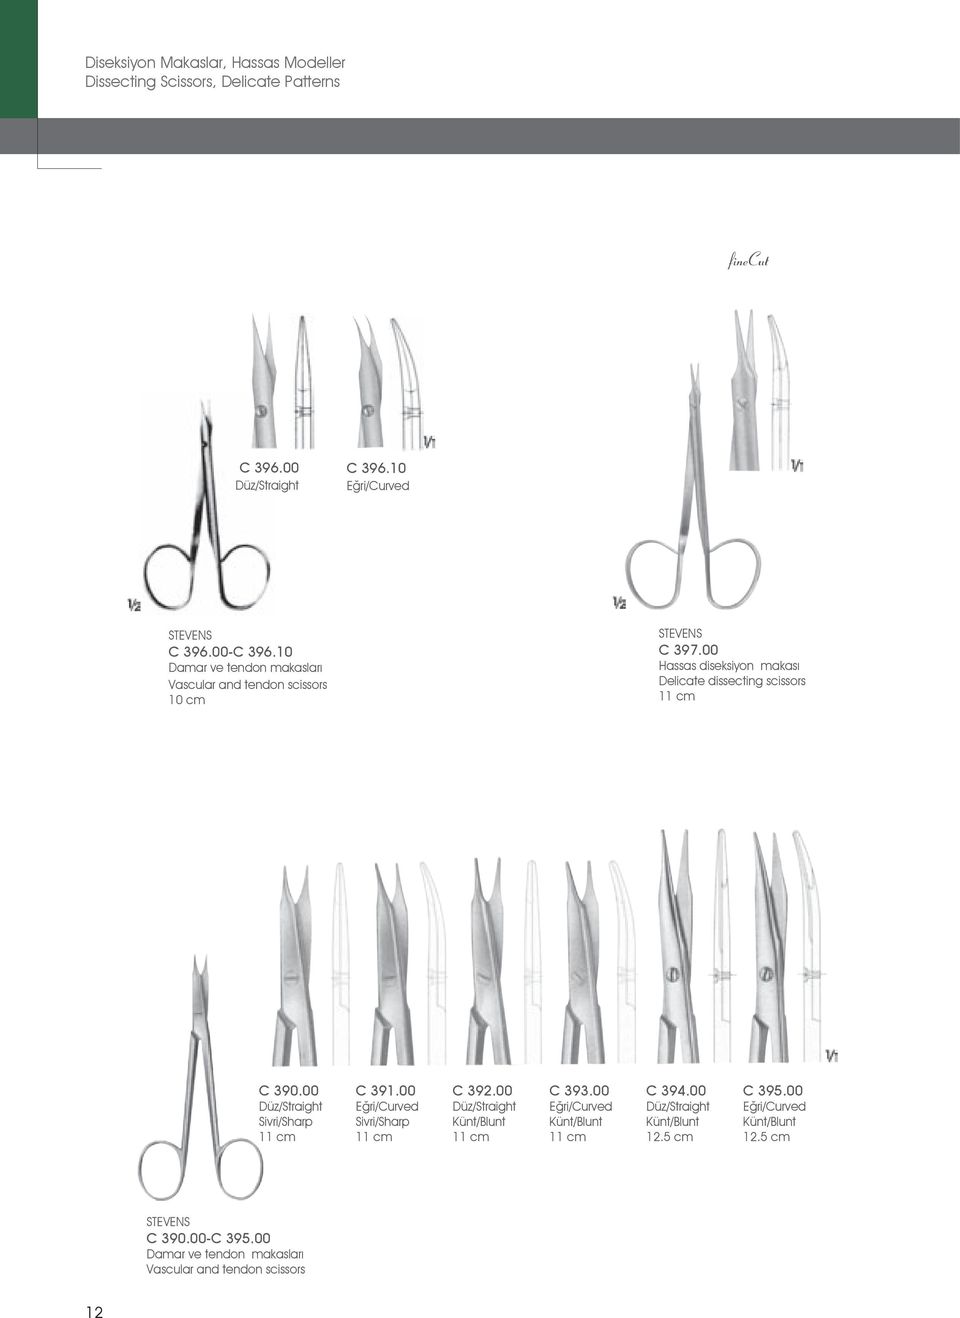 00 Hassas diseksiyon makası Delicate dissecting scissors cm C 0.00 Düz/Straight Sivri/Sharp cm C.00 Eğri/Curved Sivri/Sharp cm C.